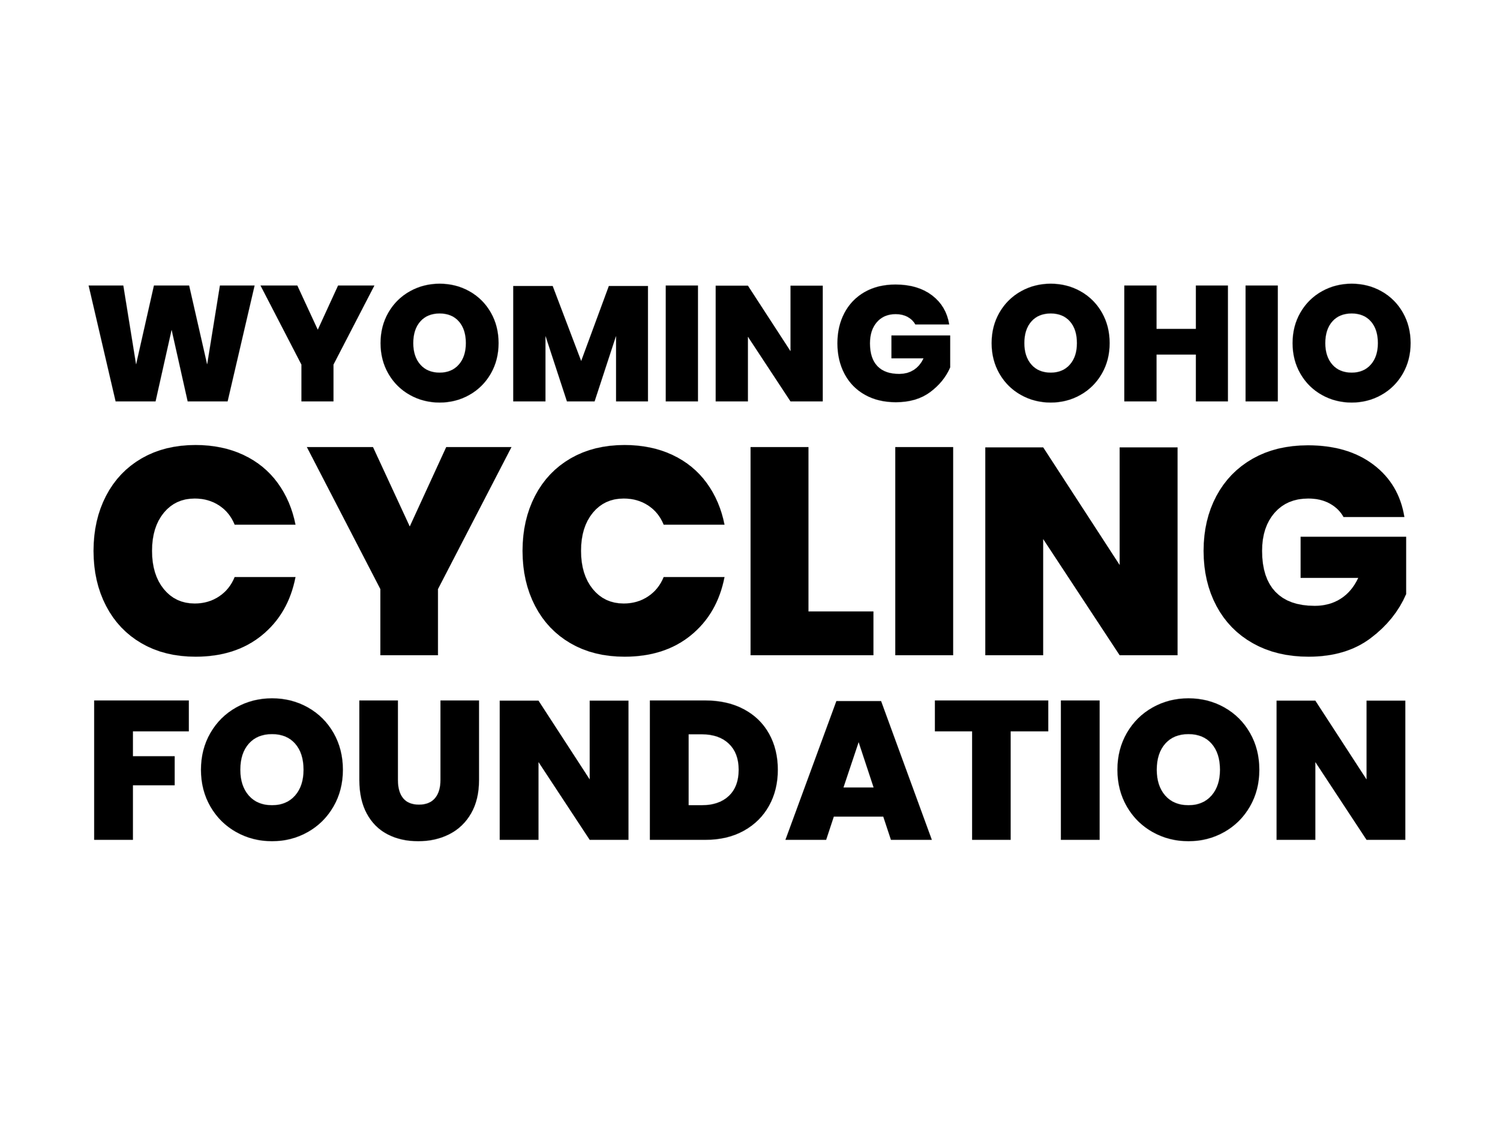 WYOMING OHIO CYCLING FOUNDATION